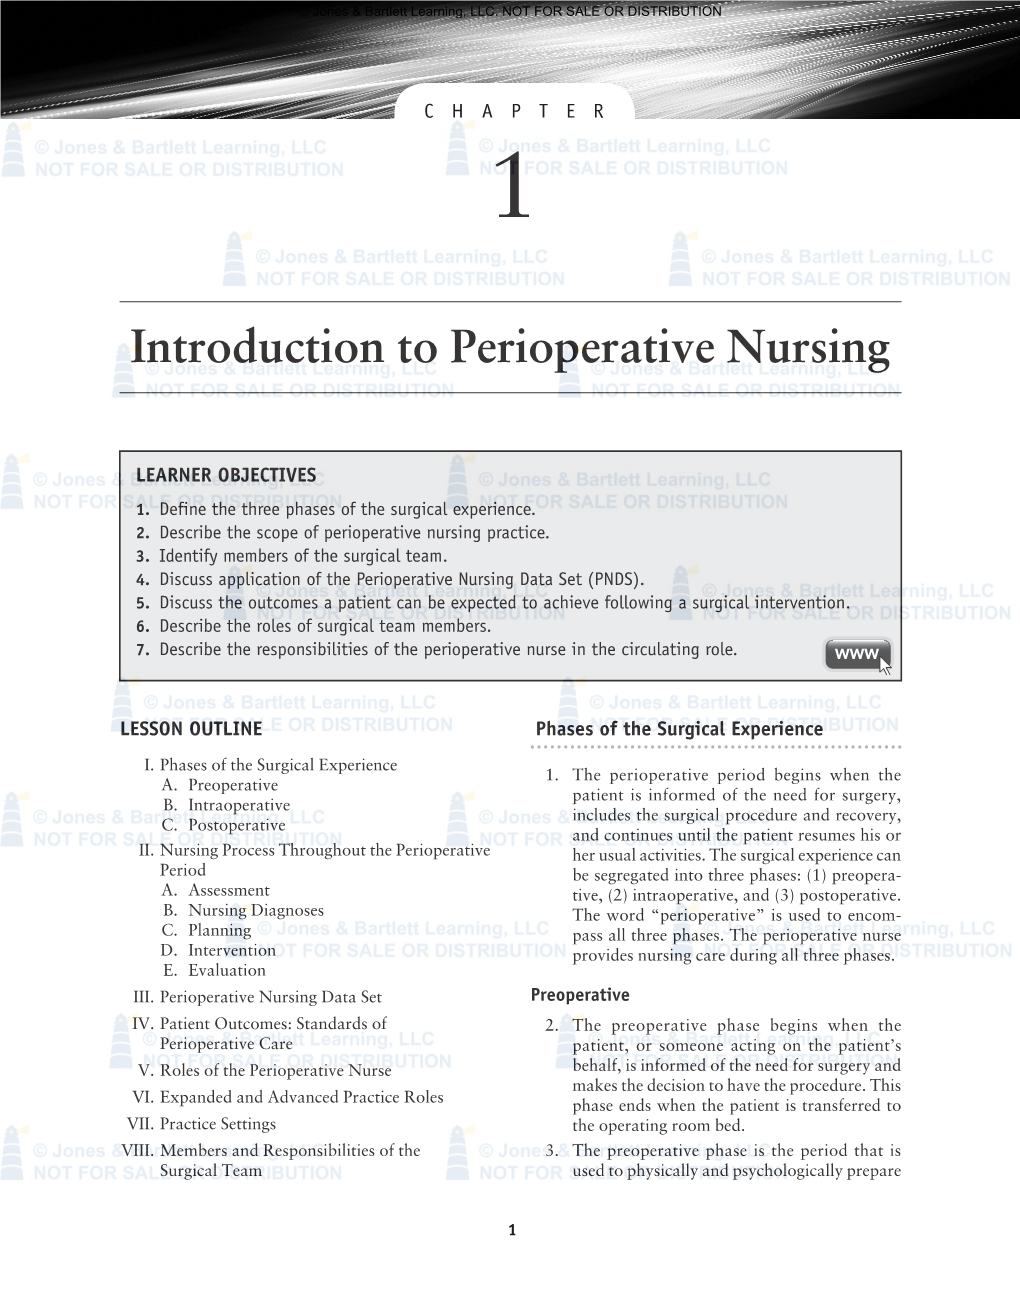 Introduction to Perioperative Nursing